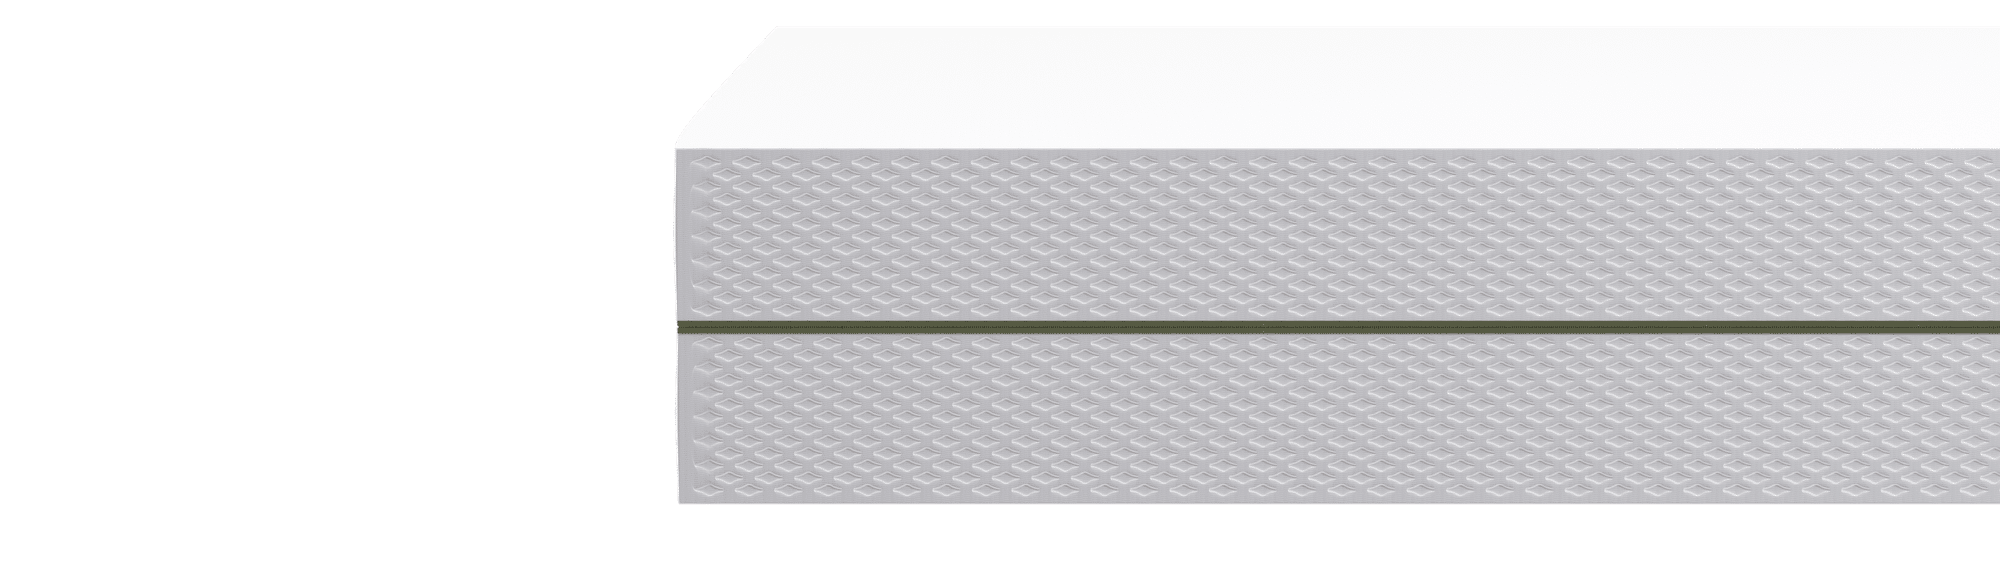 FLEXA Reversible latex mattress with cotton cover 200x140